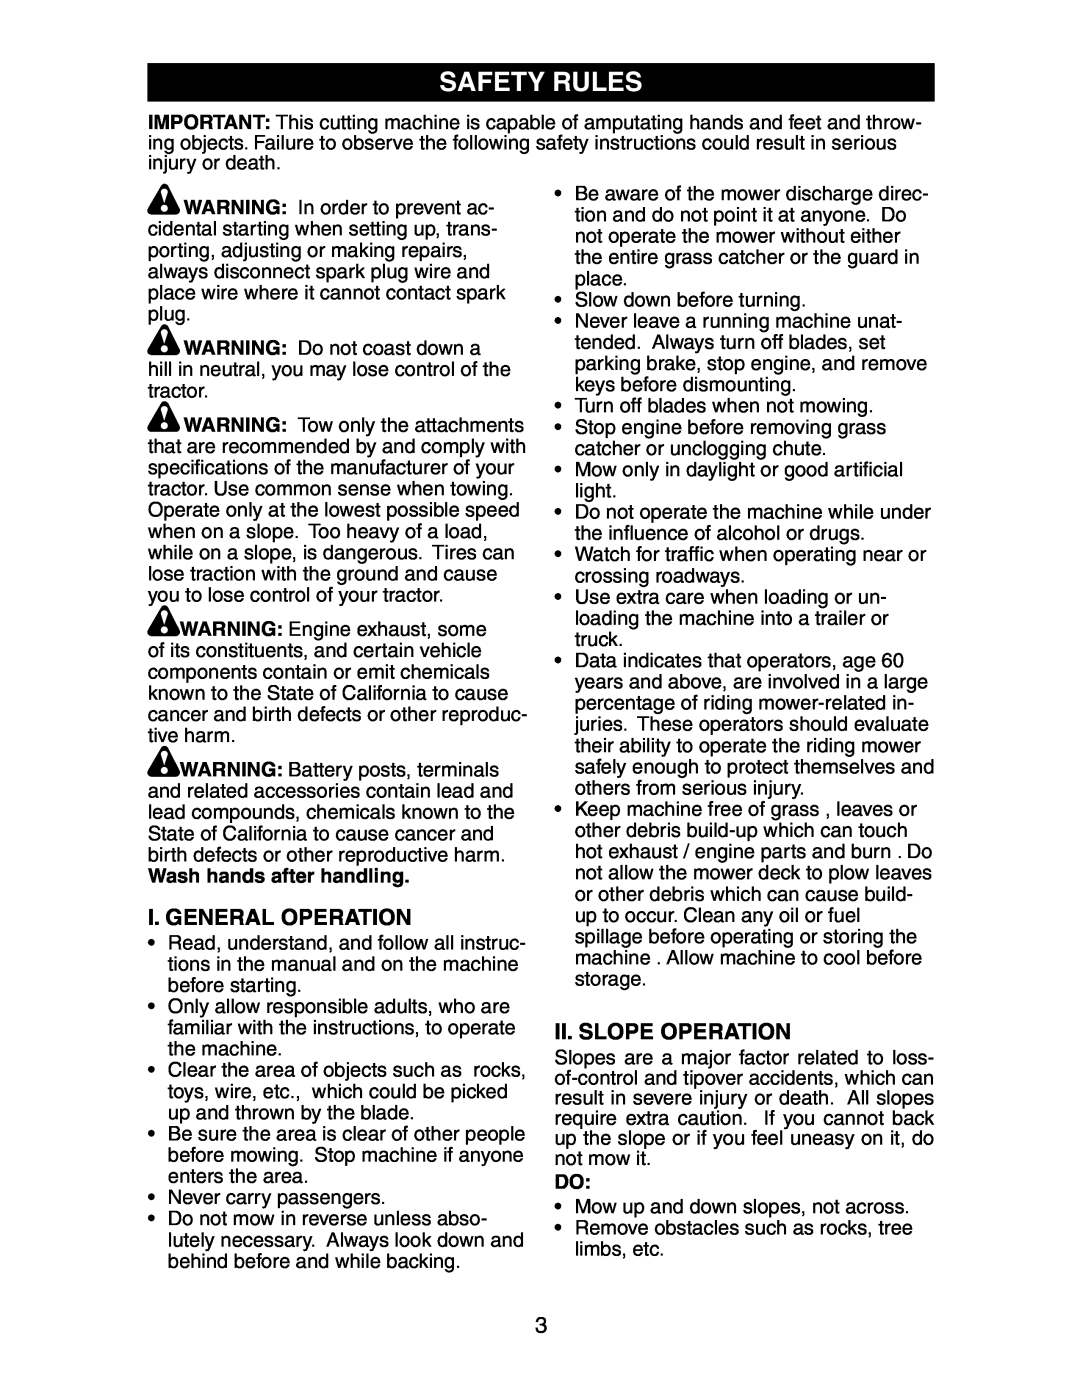 Poulan CN1842STA manual Safety Rules, I. General Operation, Ii. Slope Operation, Wash hands after handling 